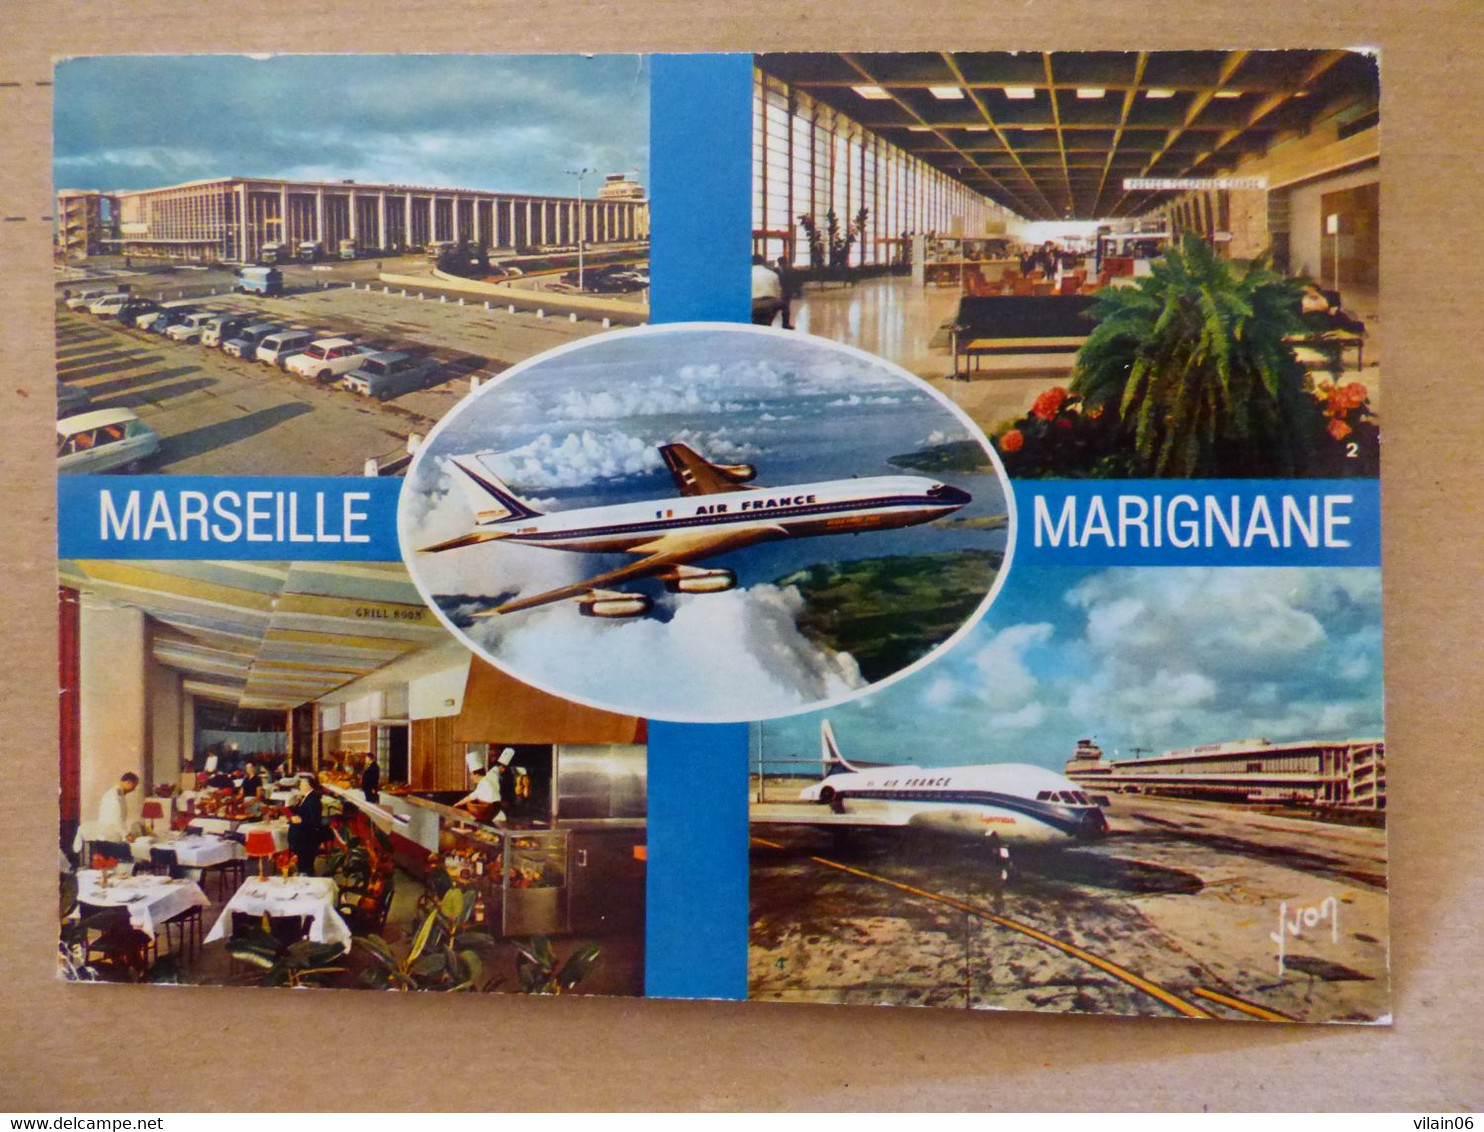 AEROPORT / AIRPORT / FLUGHAFEN     MARSEILLE MARIGNANE   AIR FRANCE  B 707/ CARAVELLE - Aerodromi